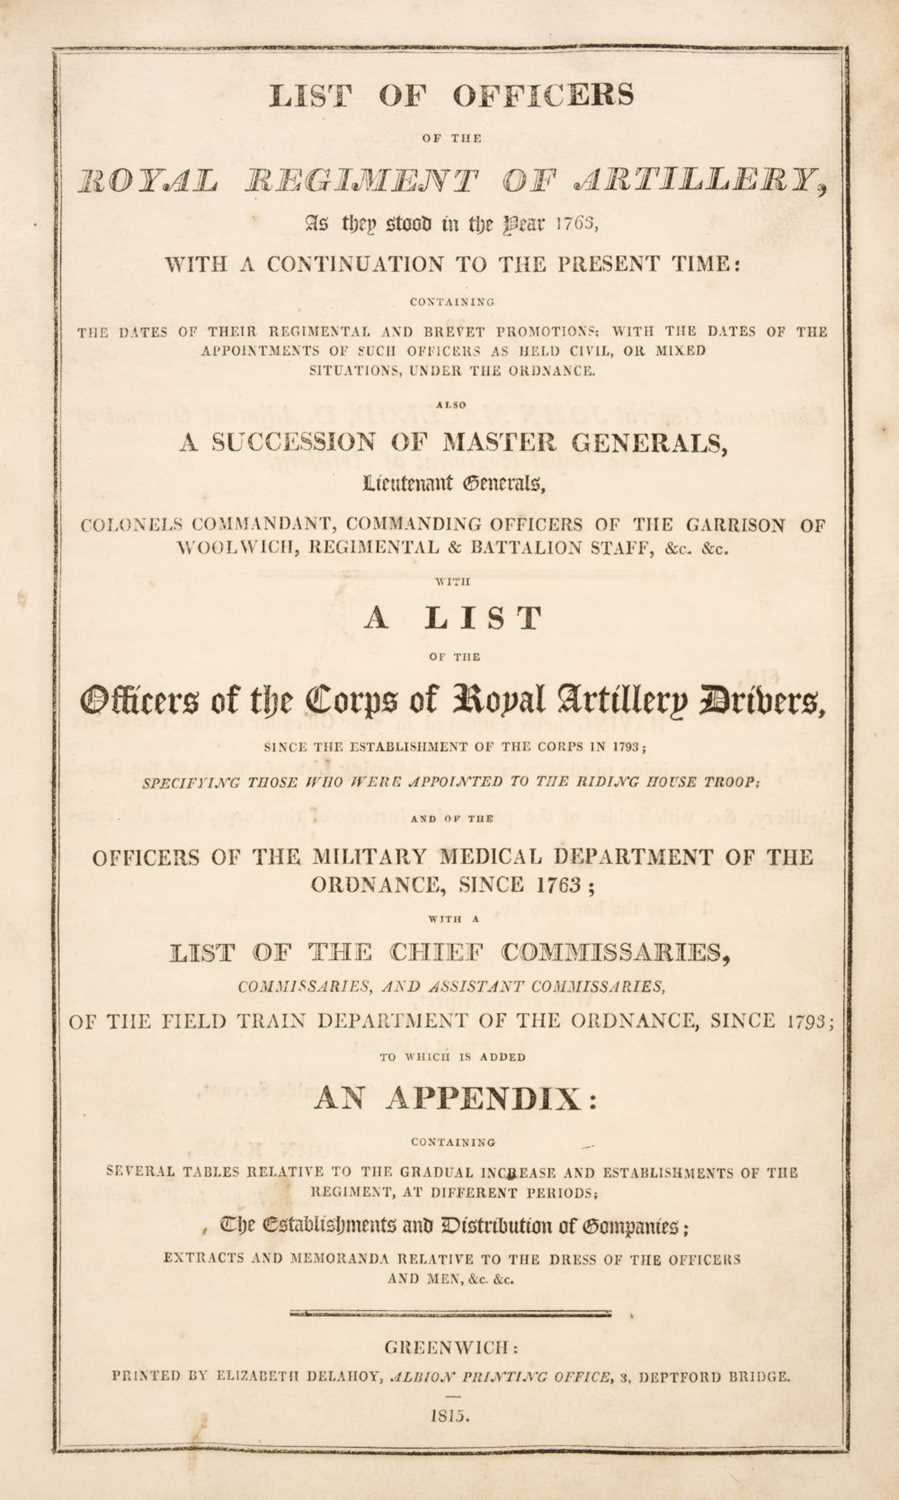 Lot 451 - Delahoy (Elizabeth, printer). List of Officers of the Royal Regiment of Artillery, Greenwich, 1815